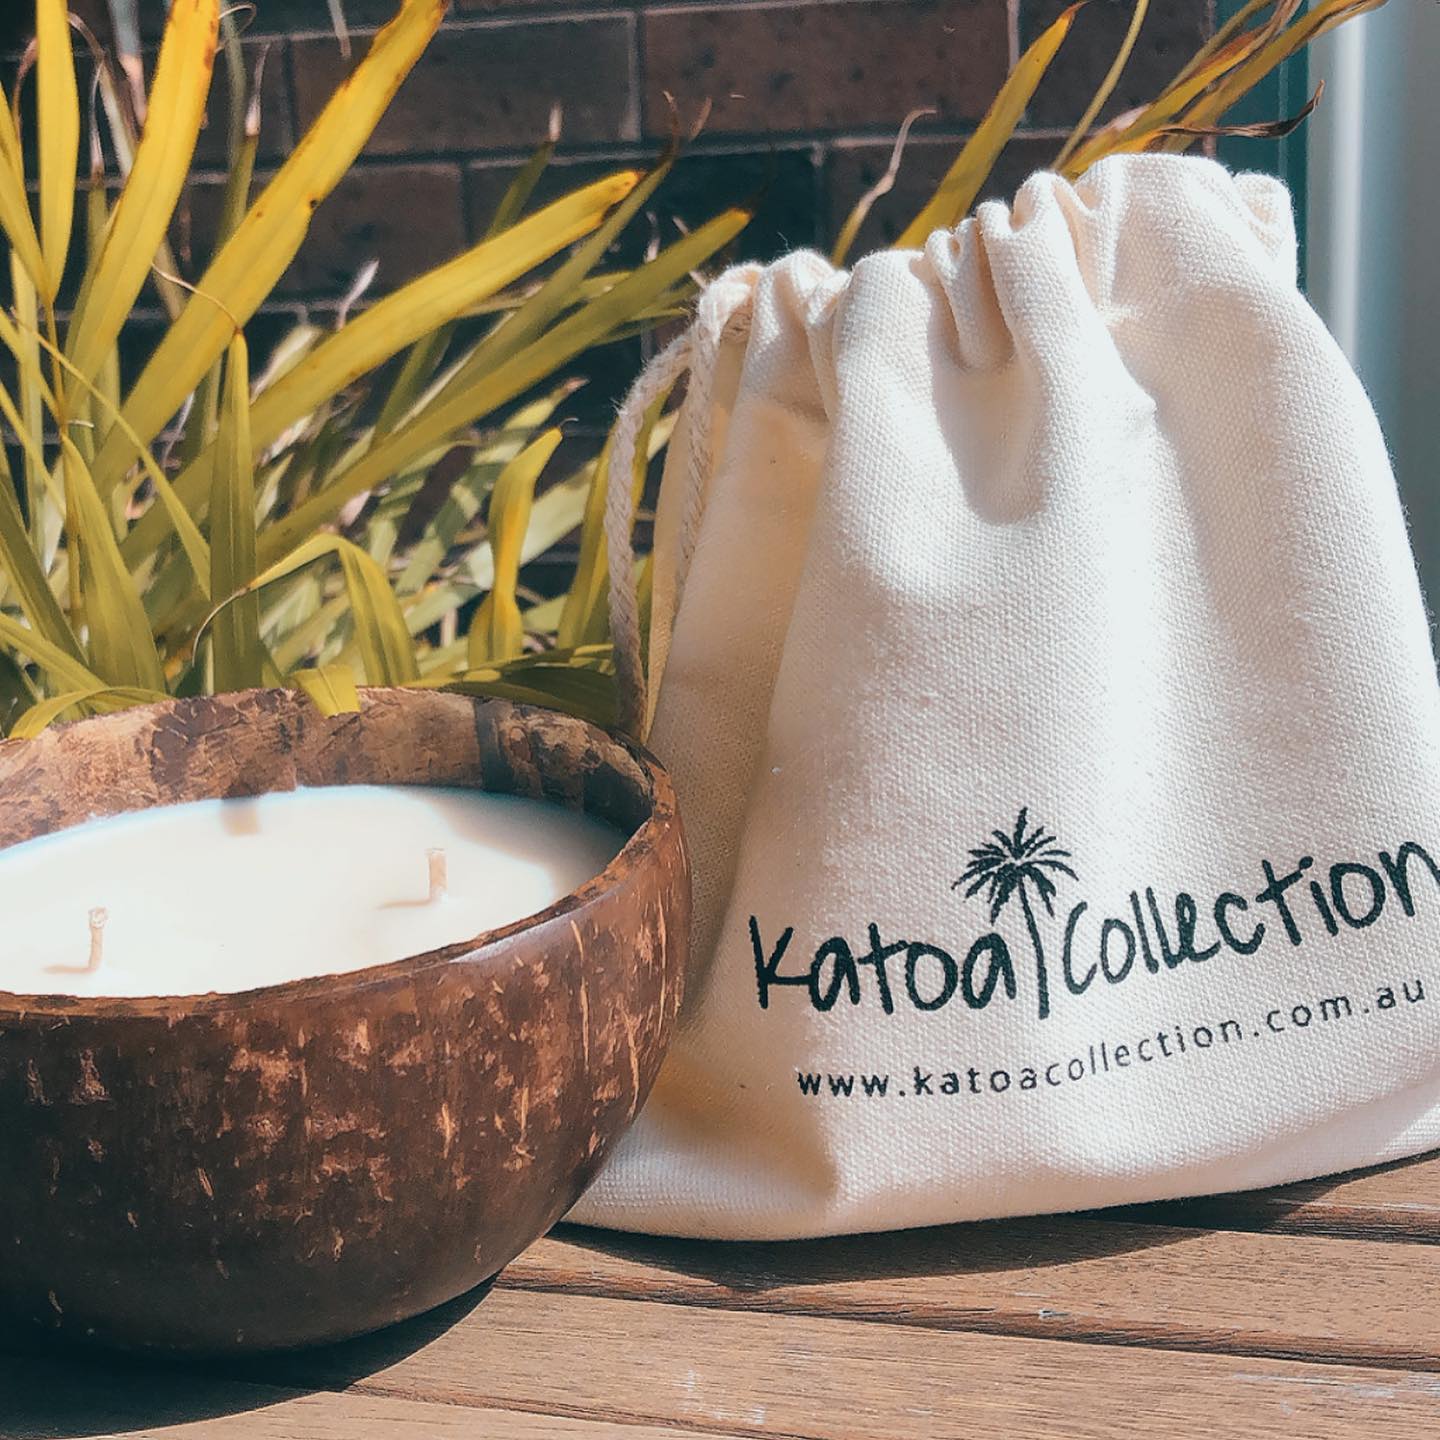 Katoa Collection